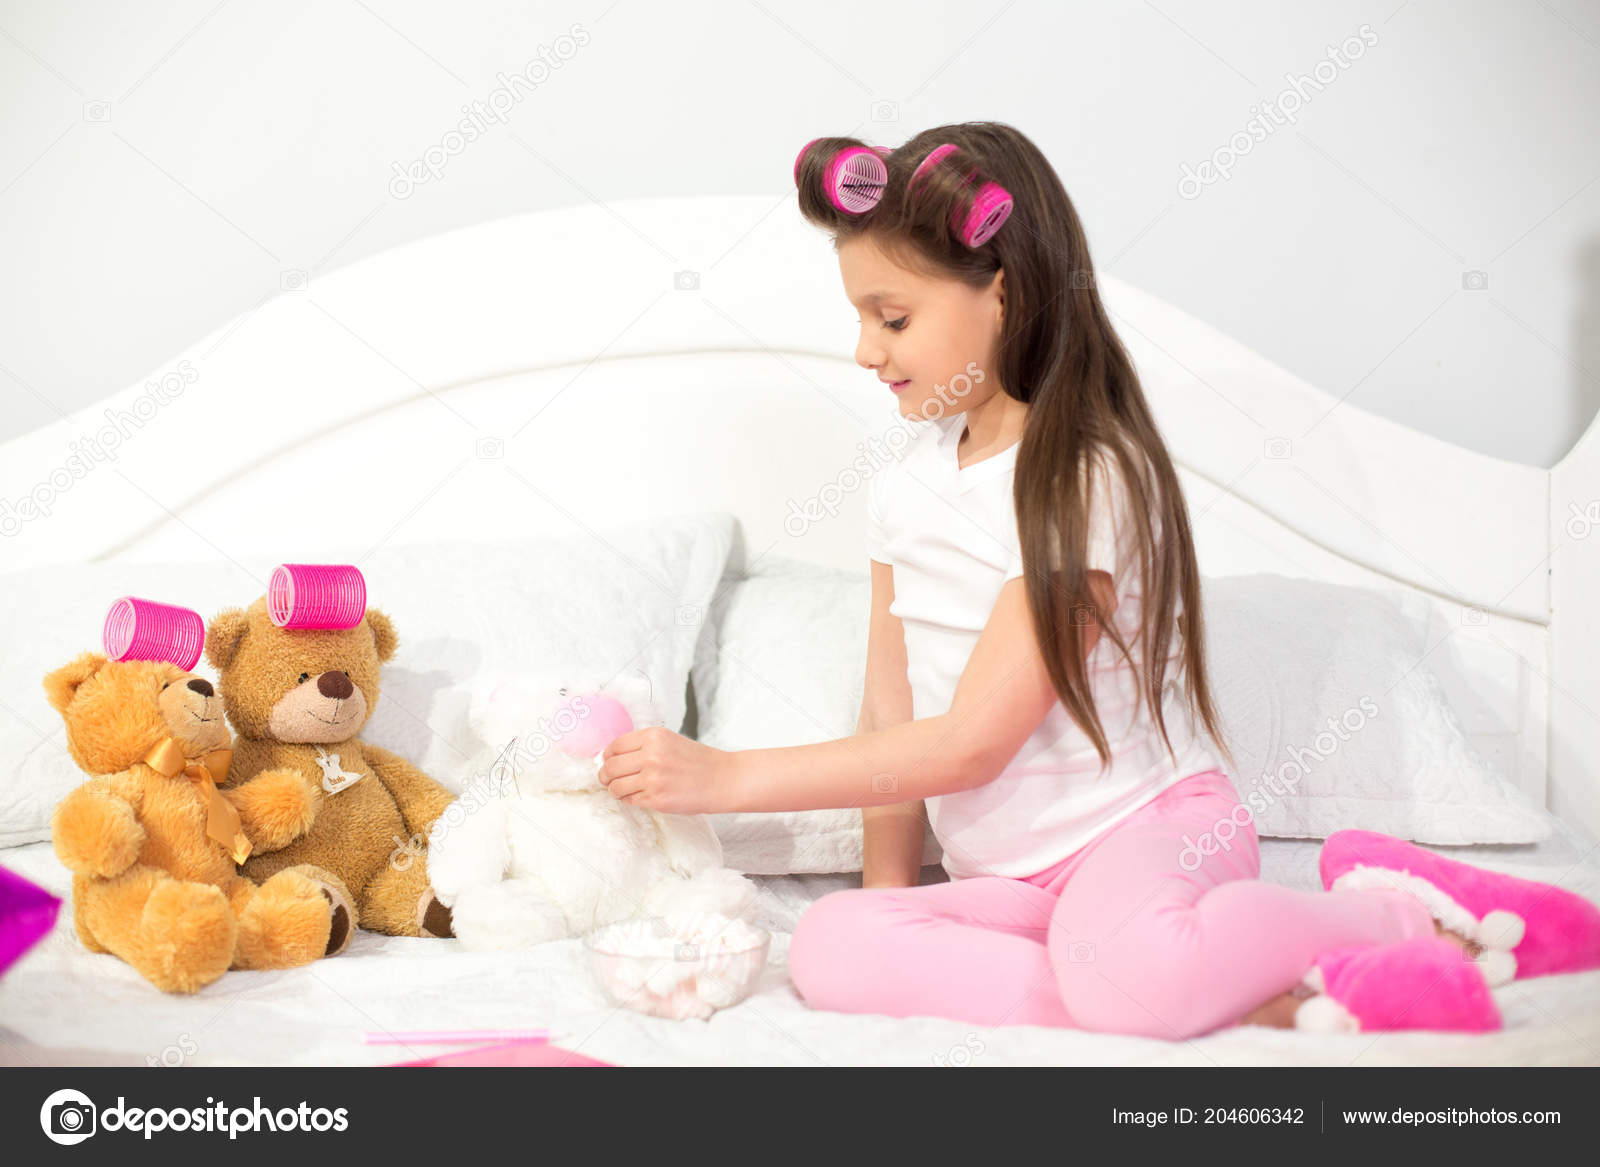 little girl stuffed animals